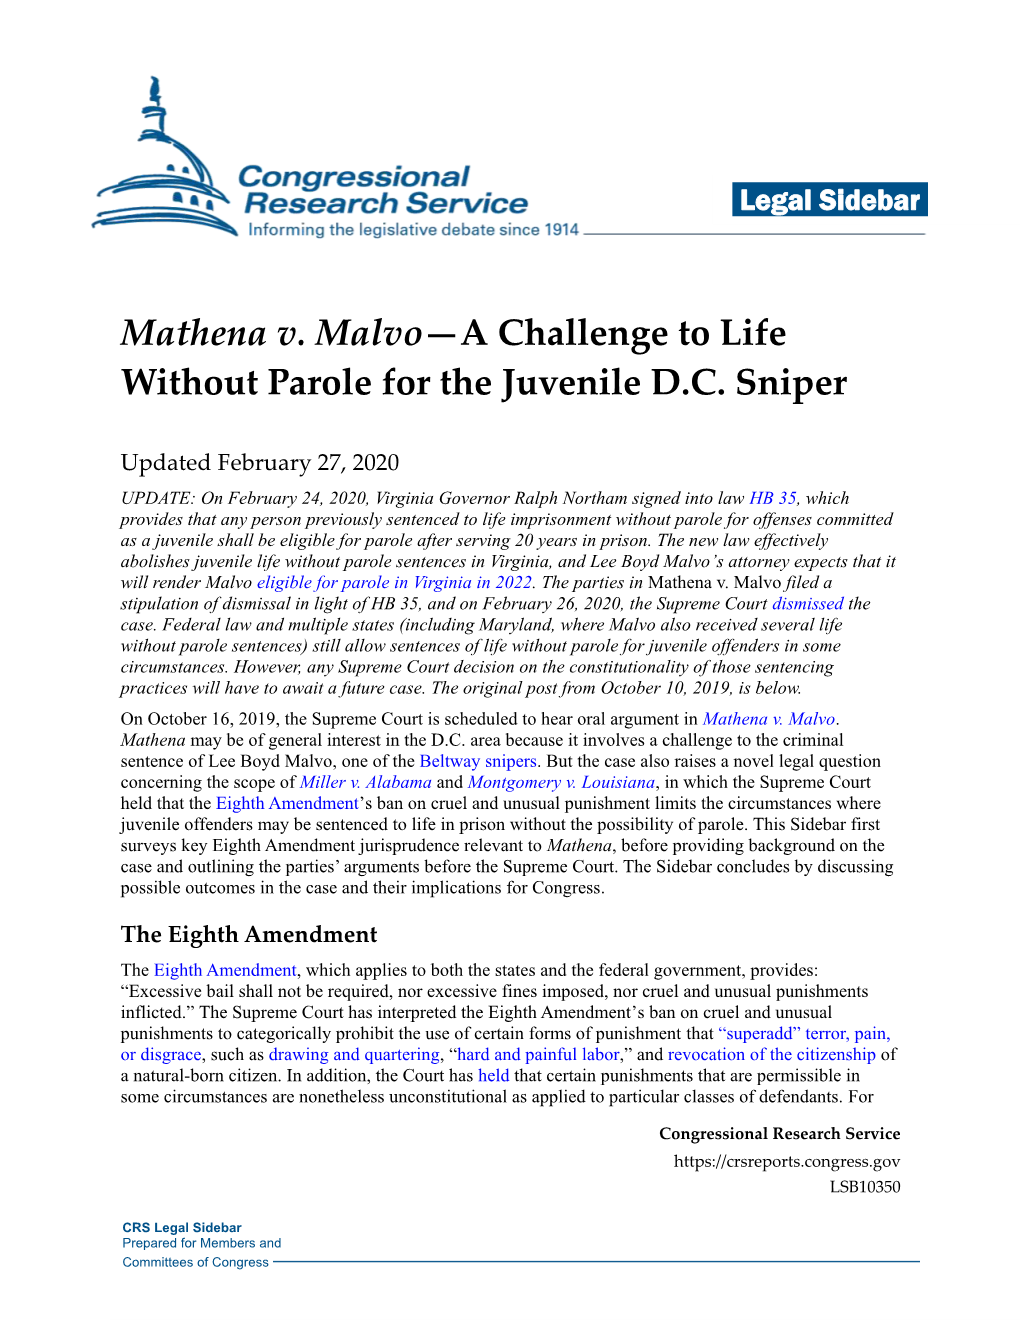 Mathena V. Malvo—A Challenge to Life Without Parole for the Juvenile D.C